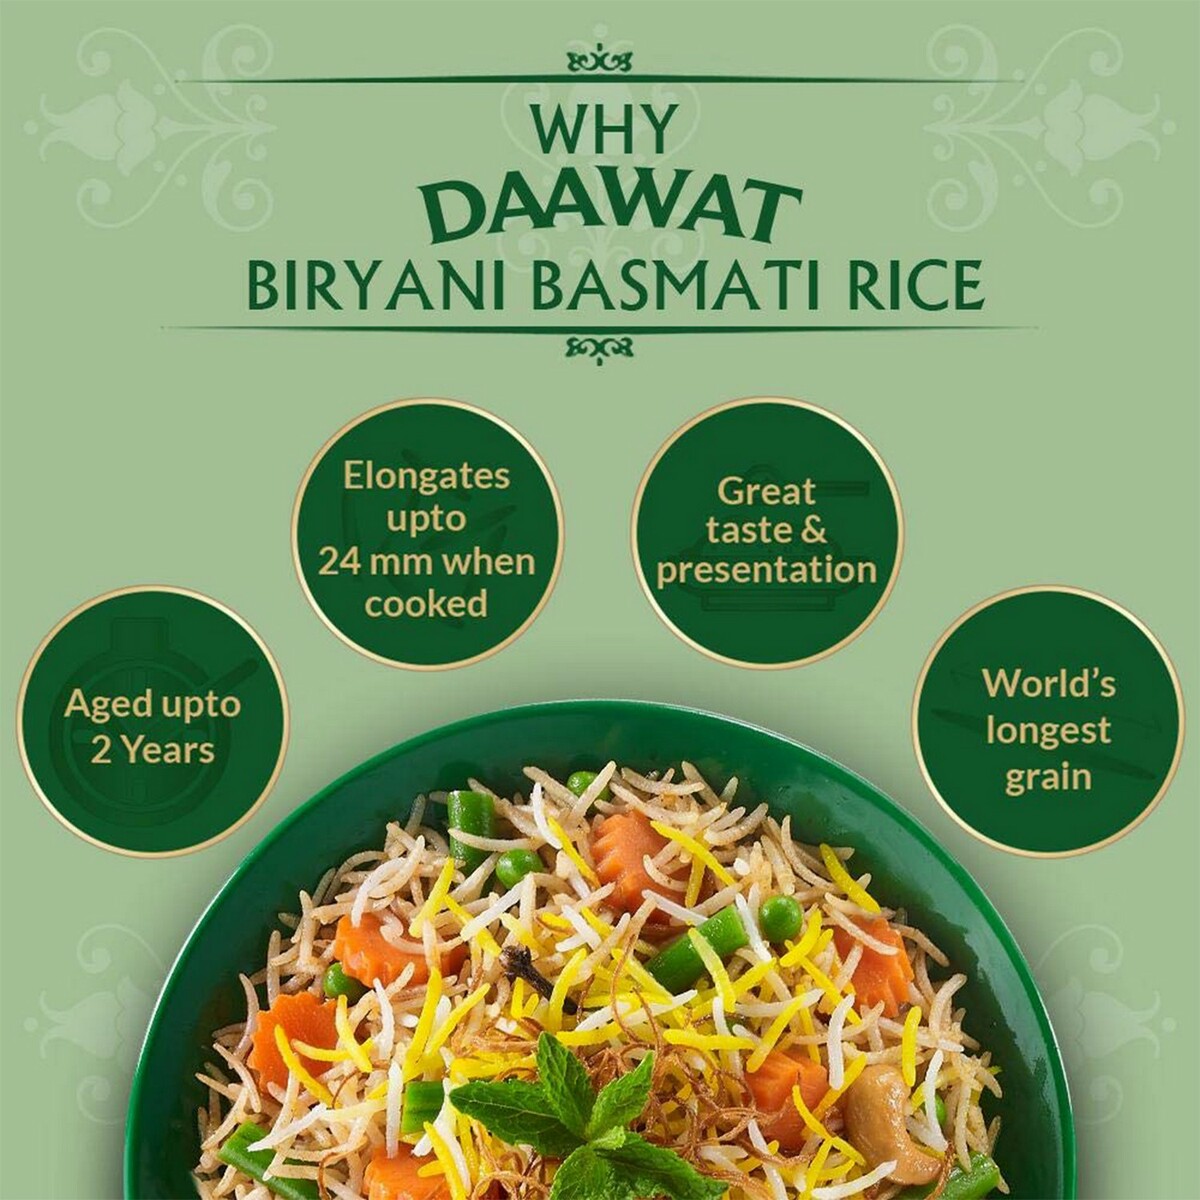 Daawat Biriyani Basmati Rice 1kg